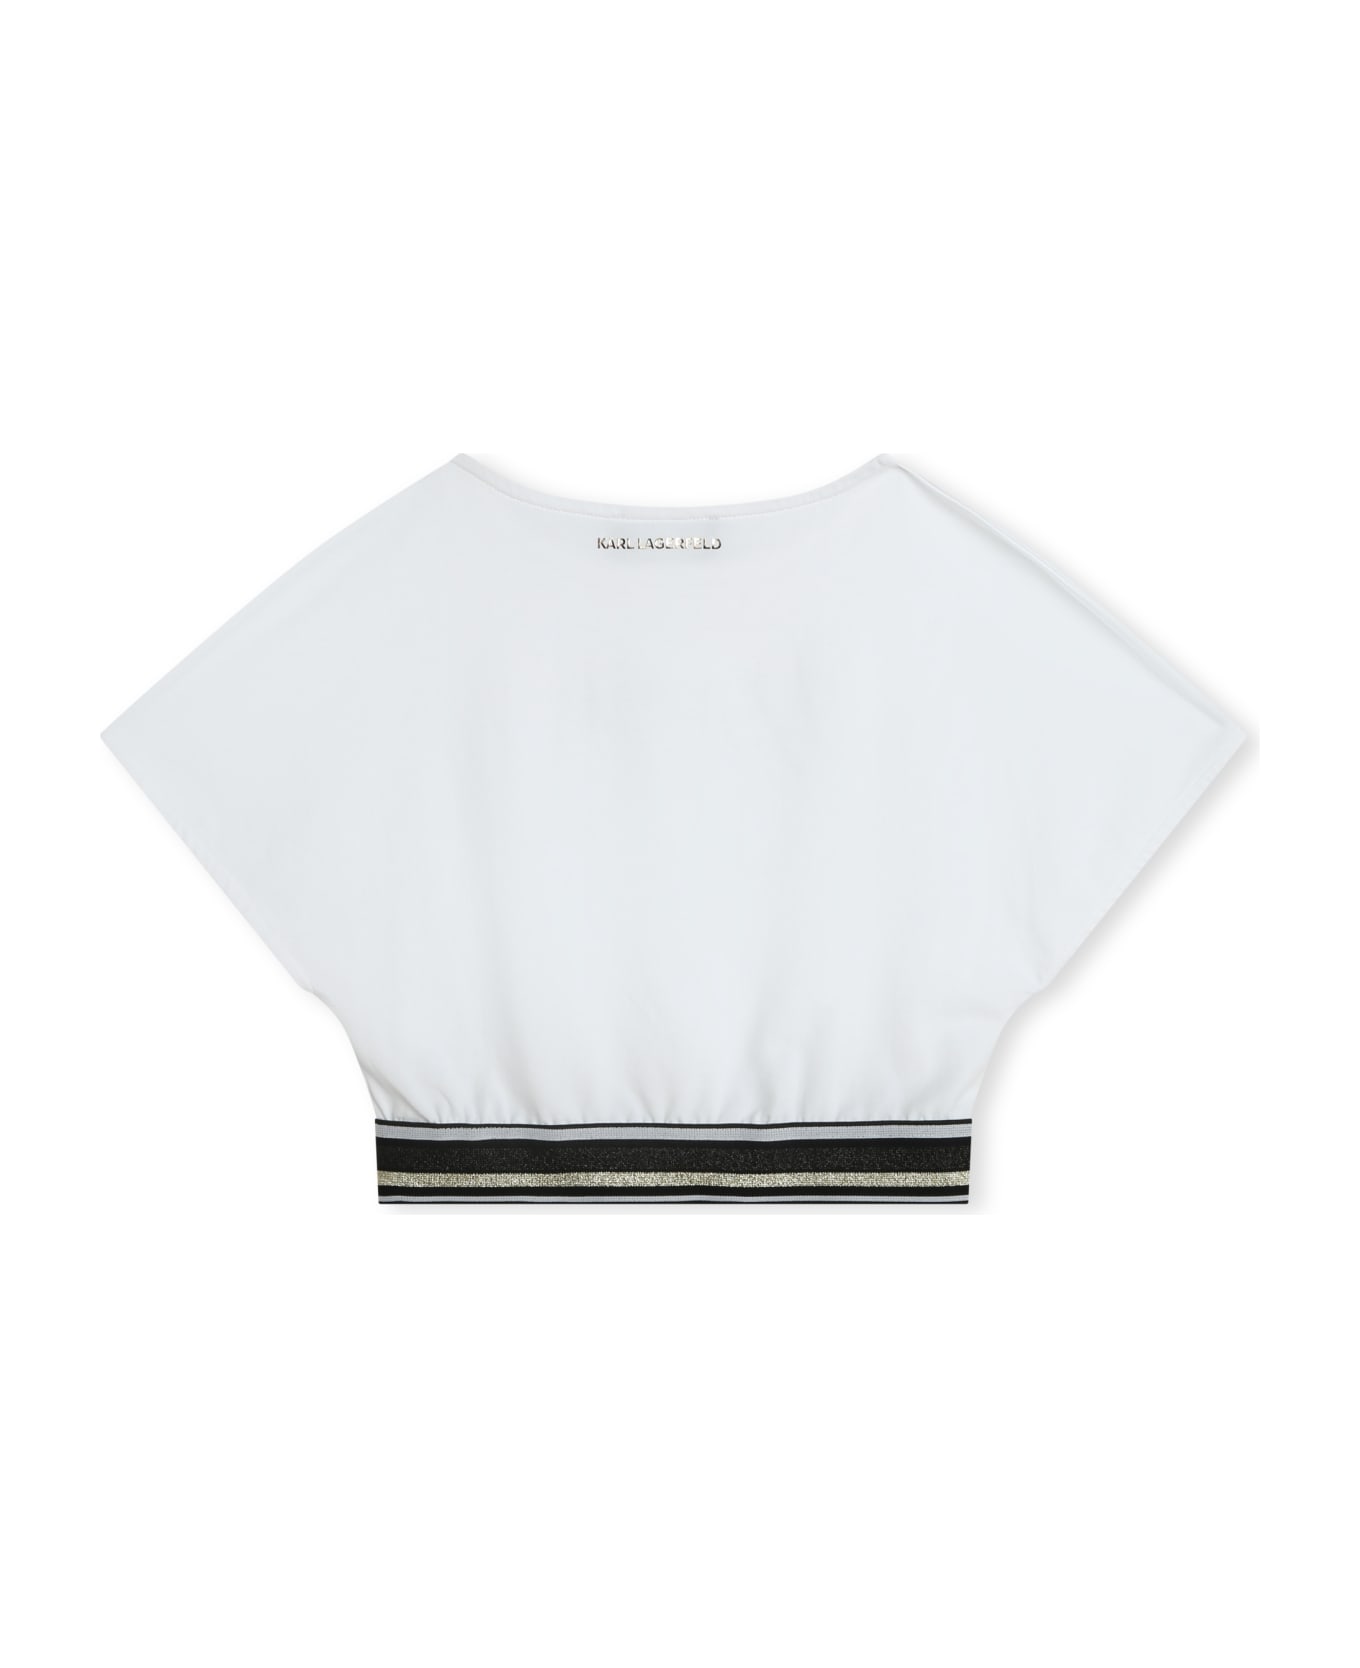 Karl Lagerfeld Kids T-shirt Con Stampa - White